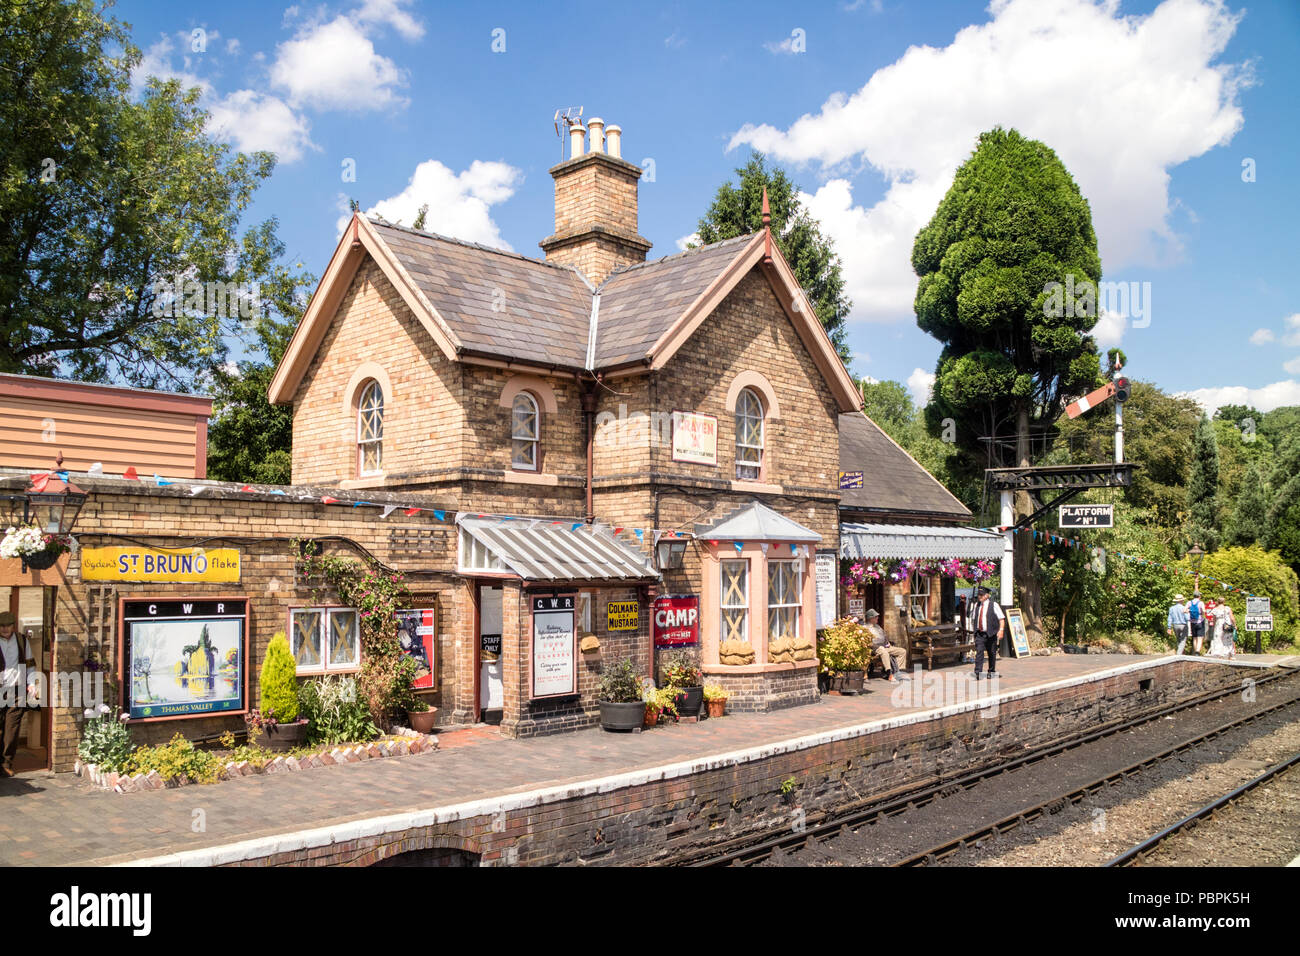 Hampton Loade station on the Severn Valley Railway heritage railway line in Shropshire, Stock Photo